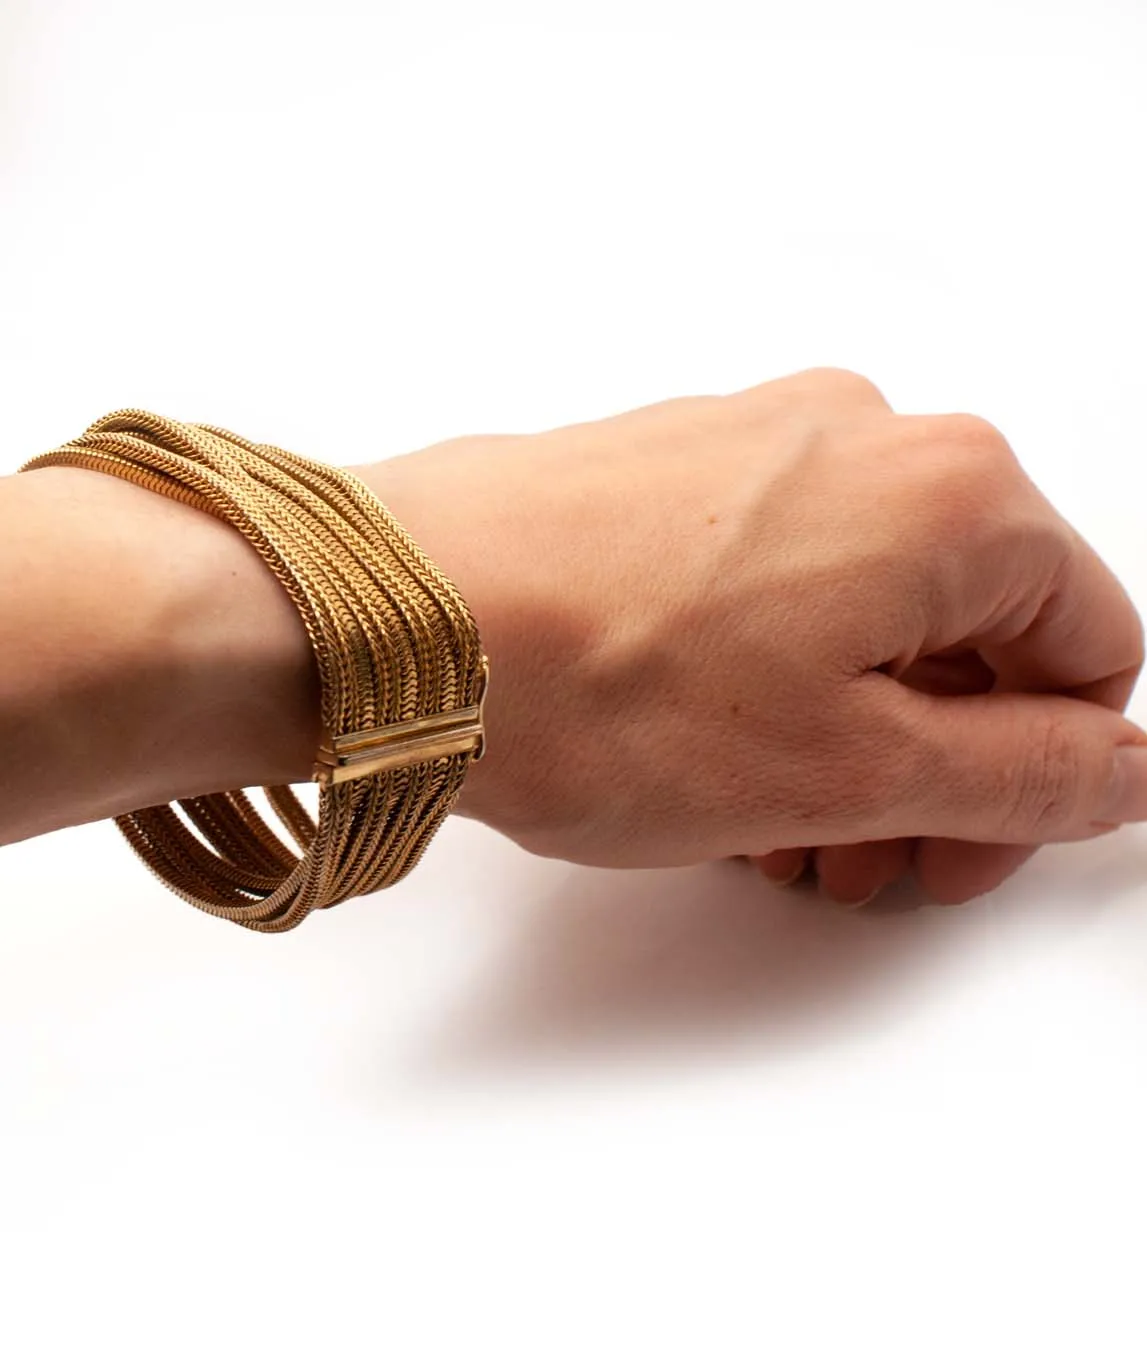 Grosse multi-chain woven gold plated bracelet worn on wrist